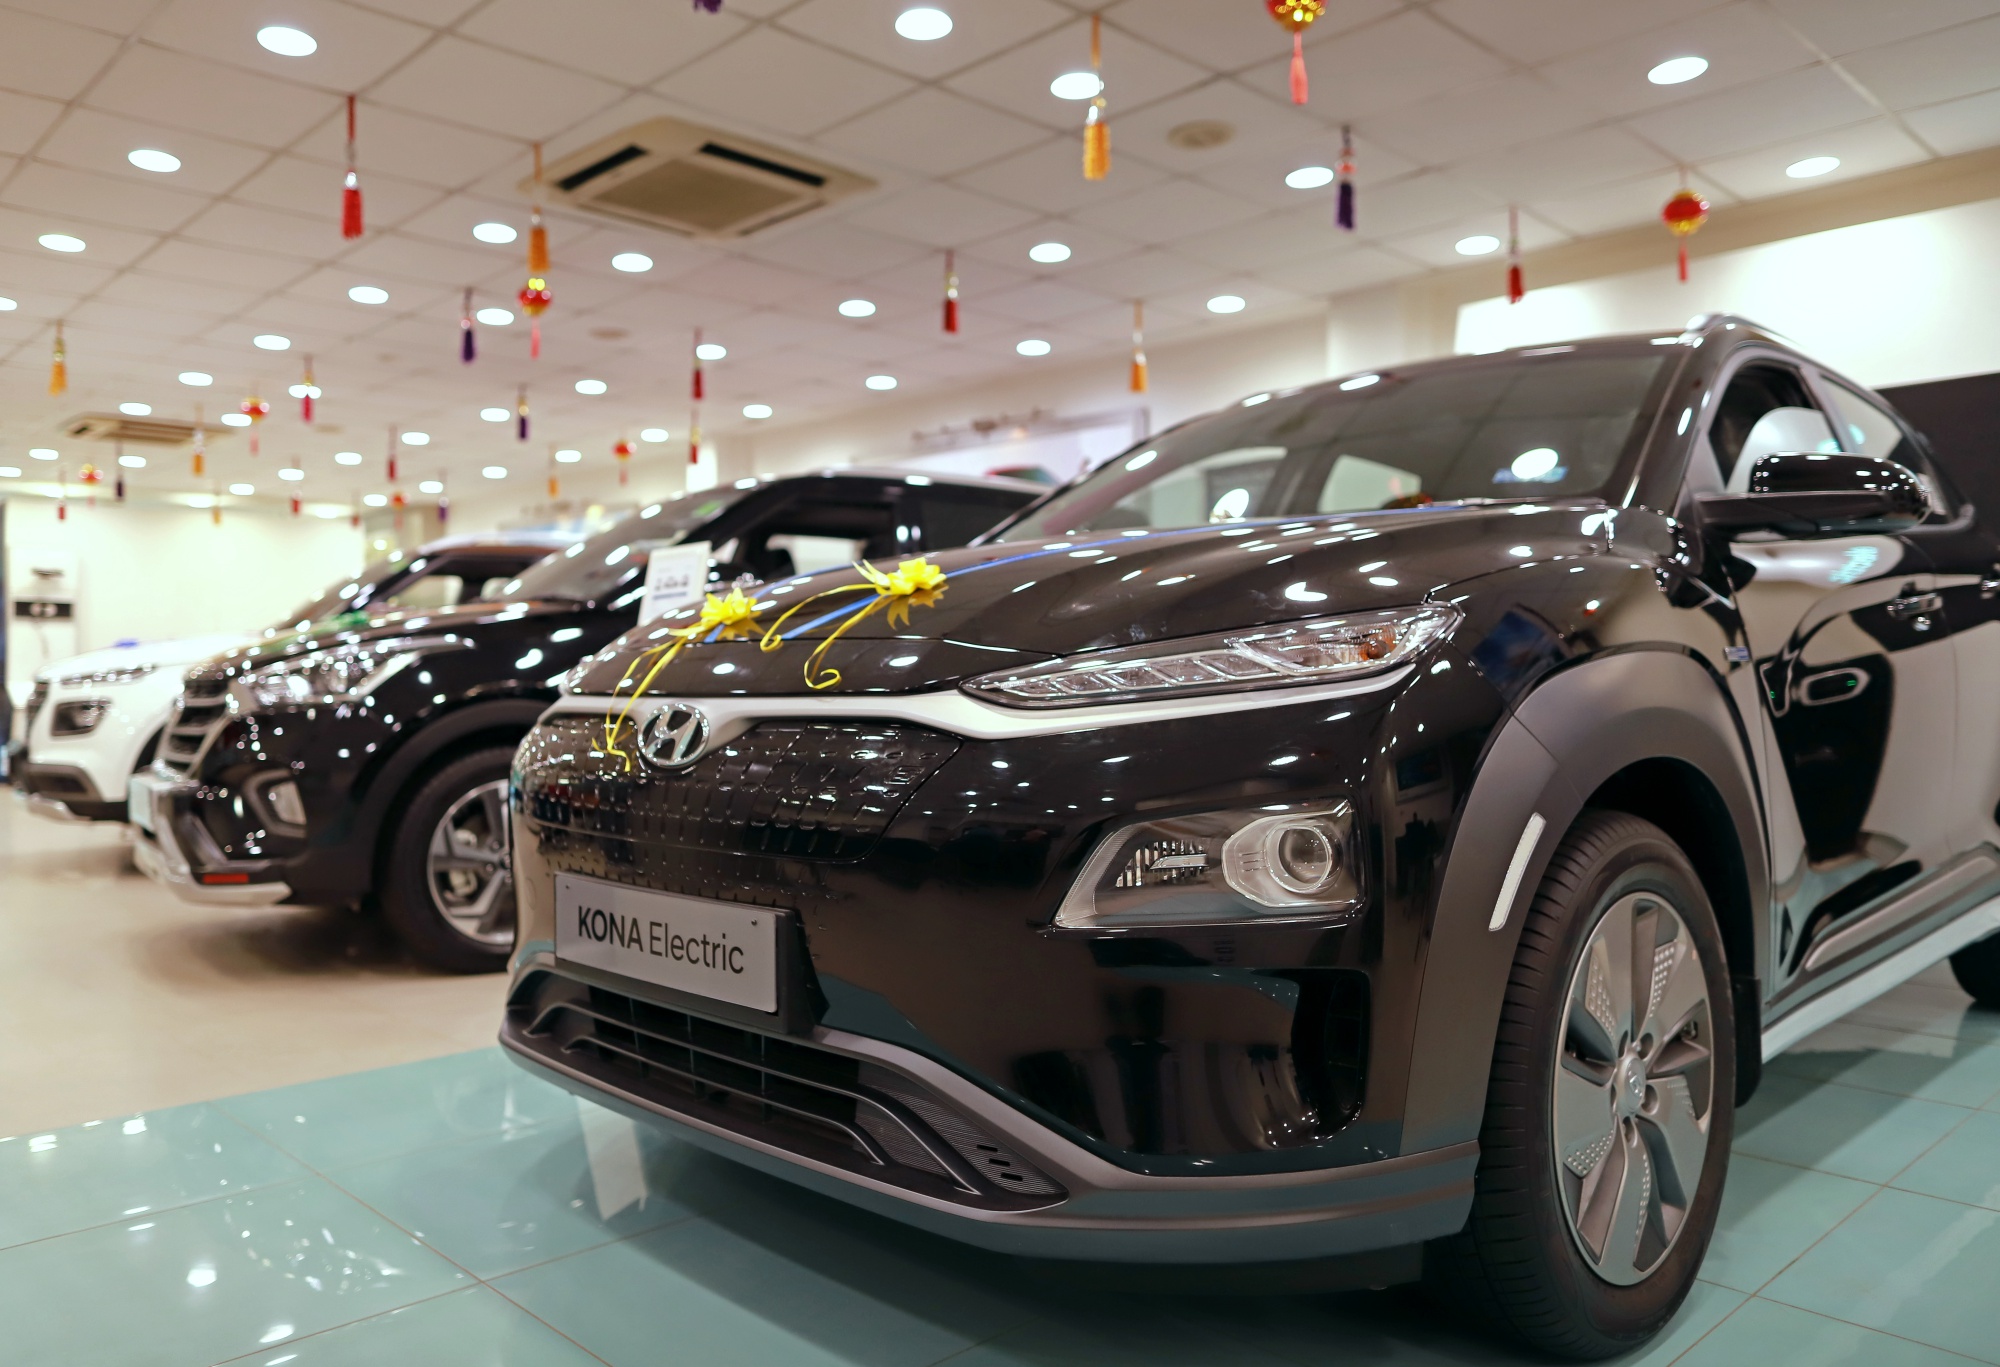 Hyundai Motor Co. Kona electric vehicle at a showroom in New Delhi.